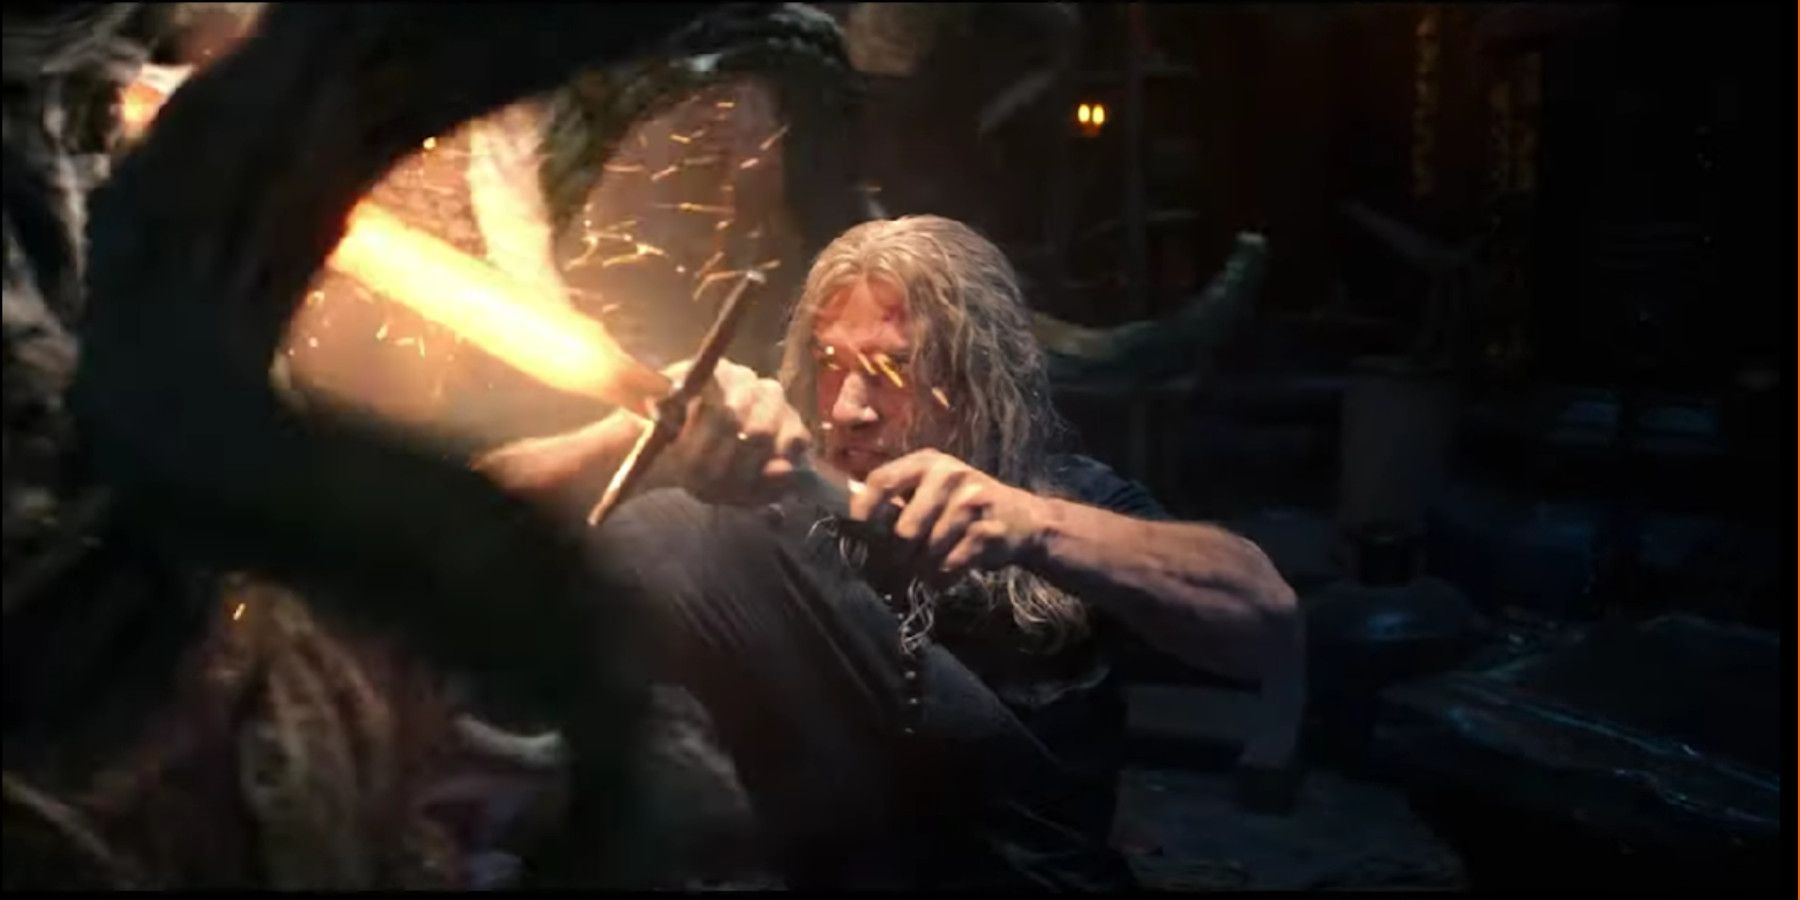 Geralt igni enchanted sword blade netflix season 2 witcher